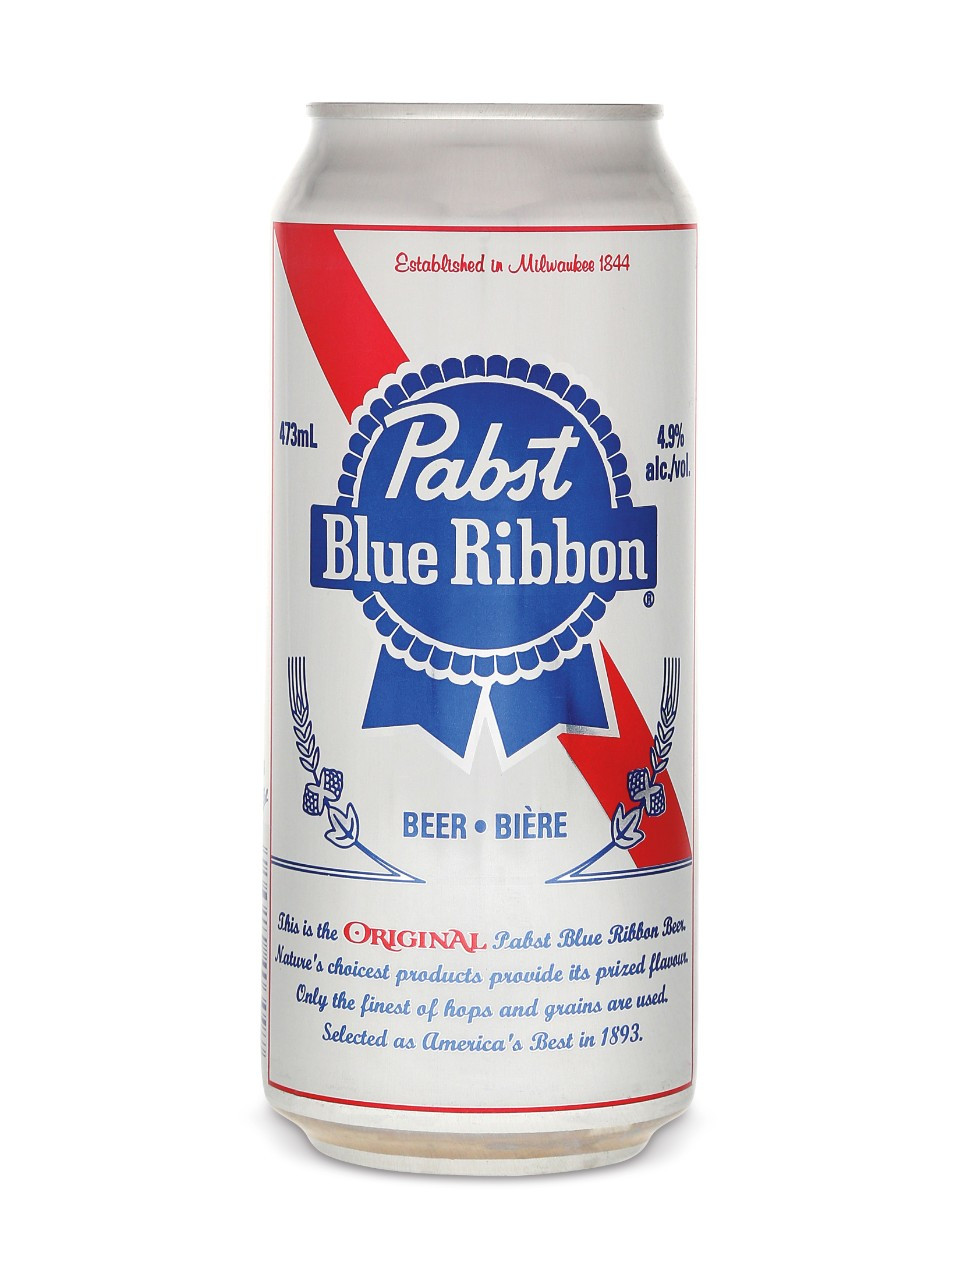 Pabst blue ribbon